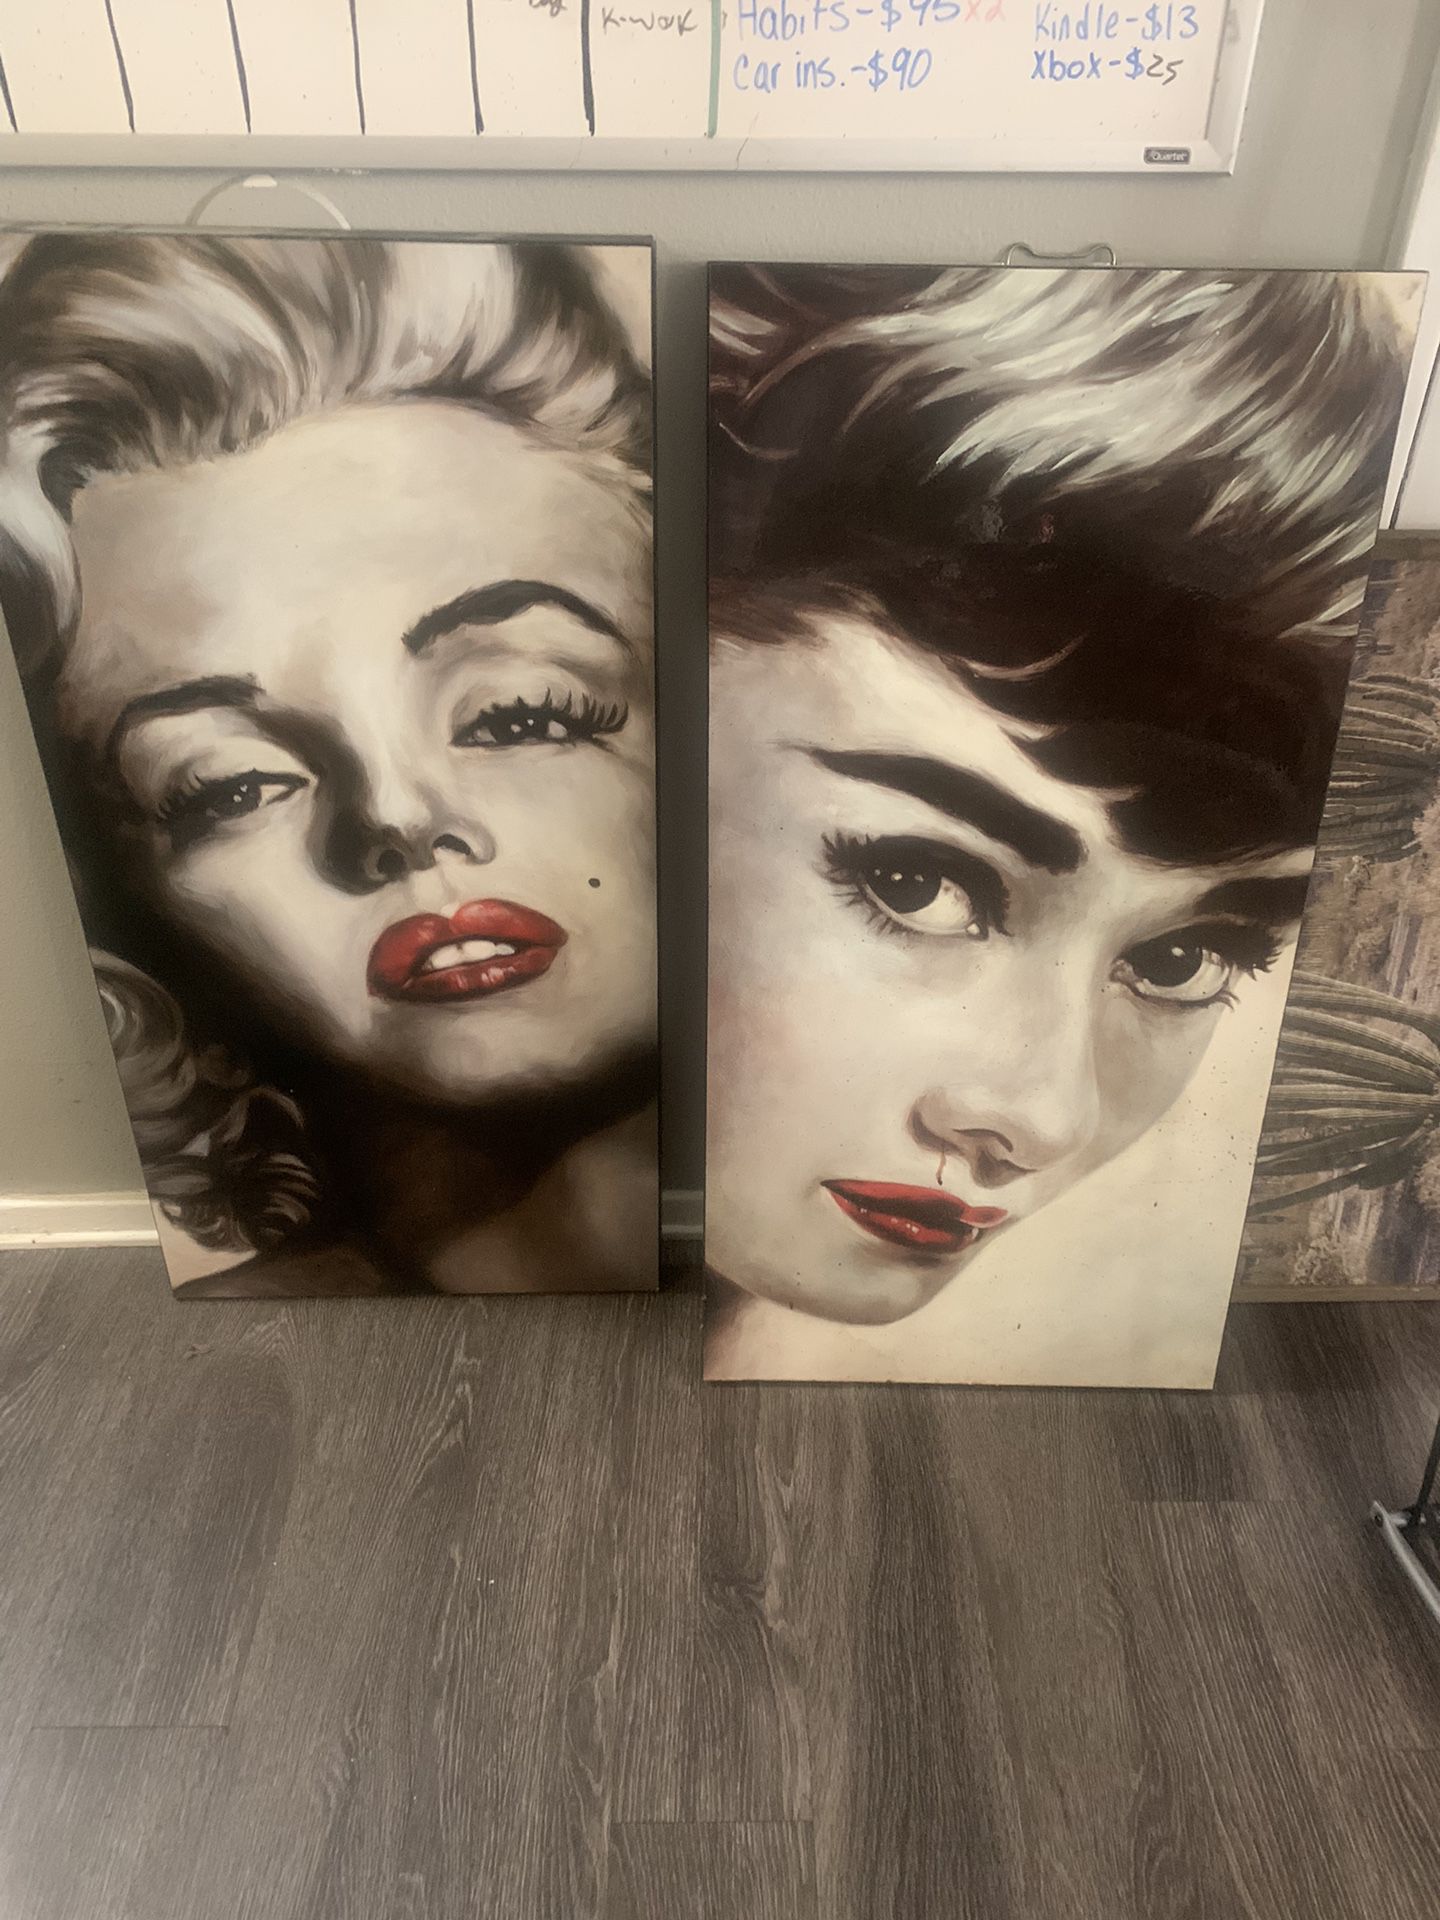 Glamorous Audrey & Marilyn